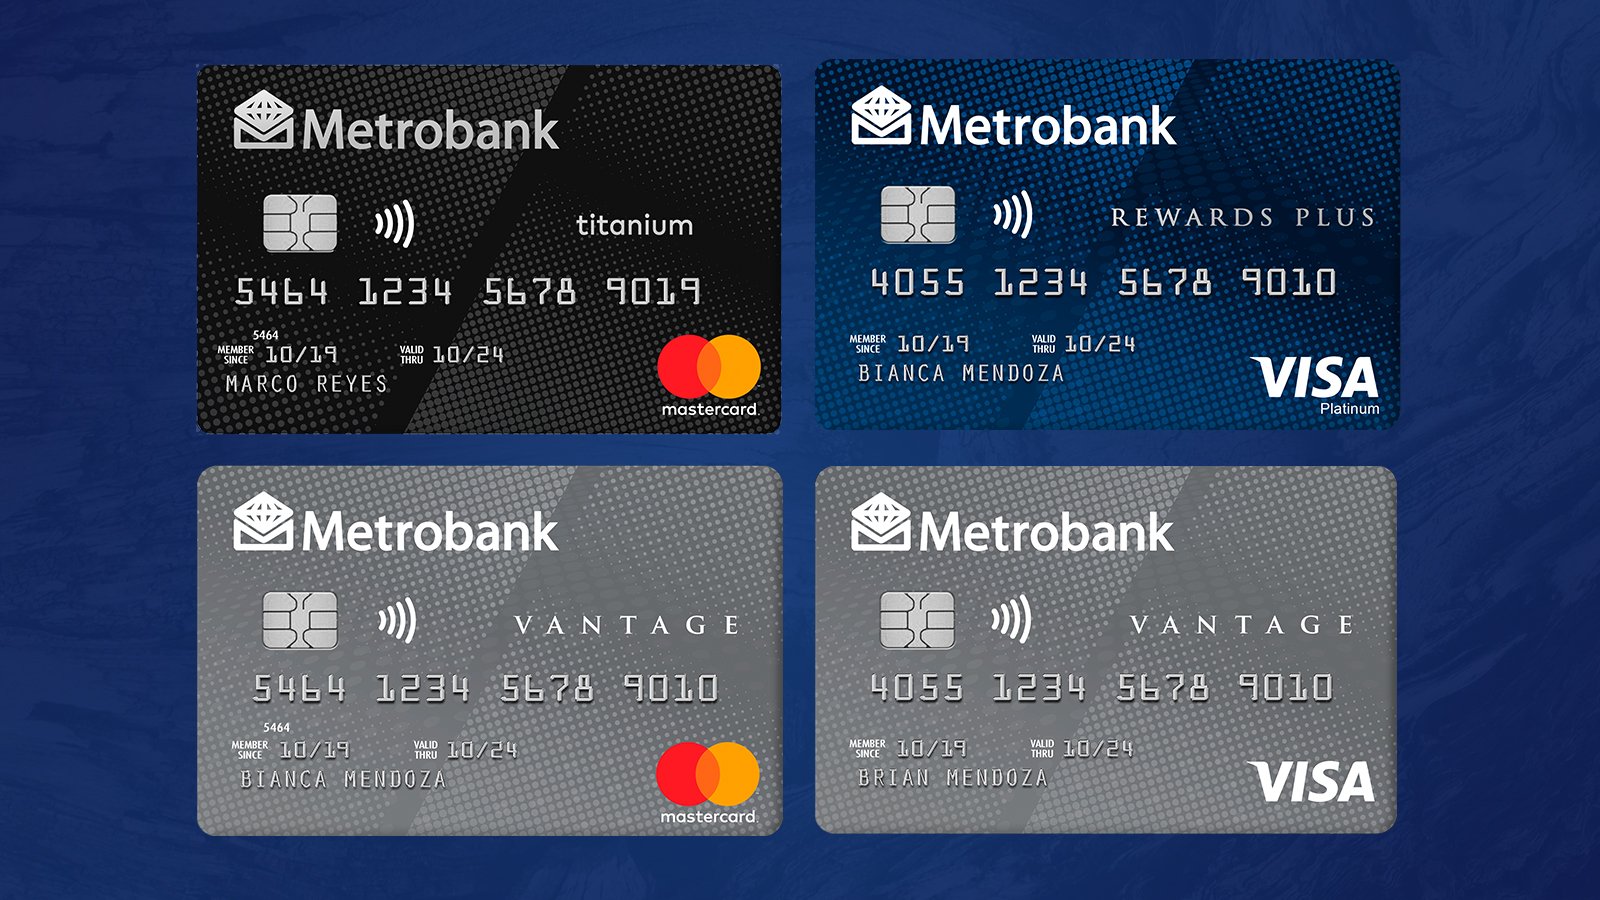 2. McDonald's Metrobank Credit Card Promo - wide 4